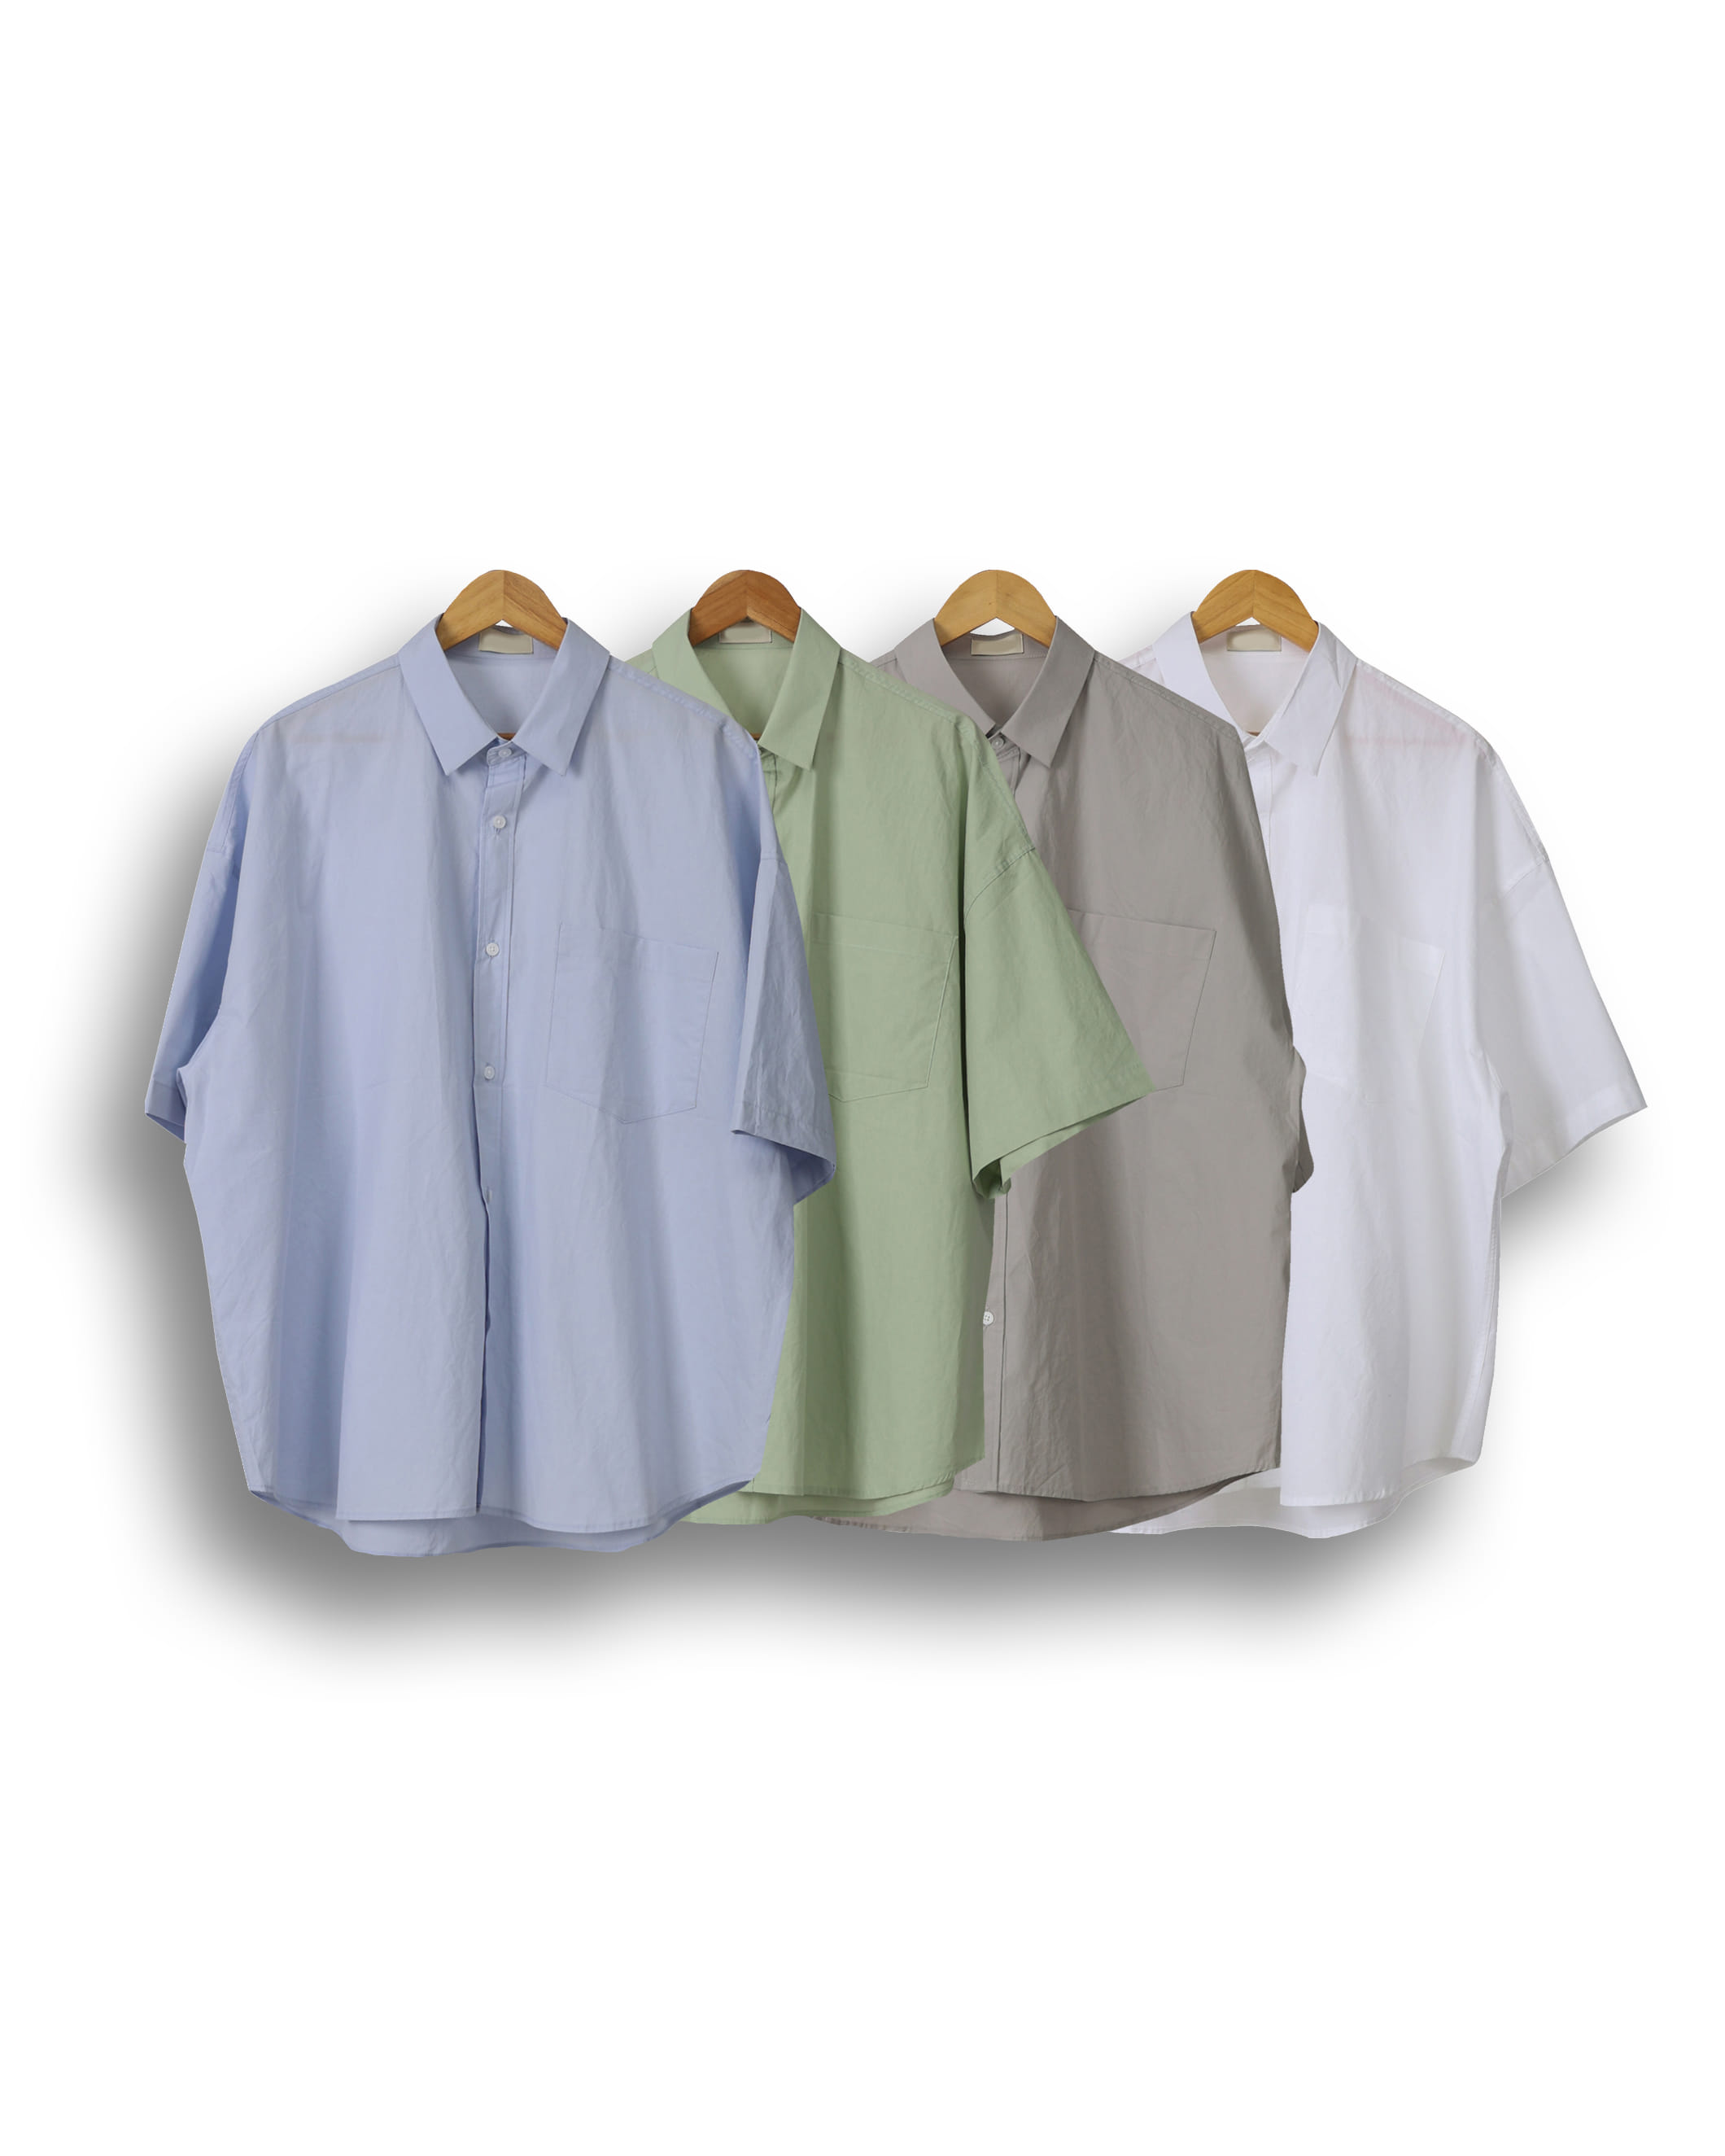 FREAKS Oversized Plain Big Shirts (Gray/Mint/Sky Blue/White)